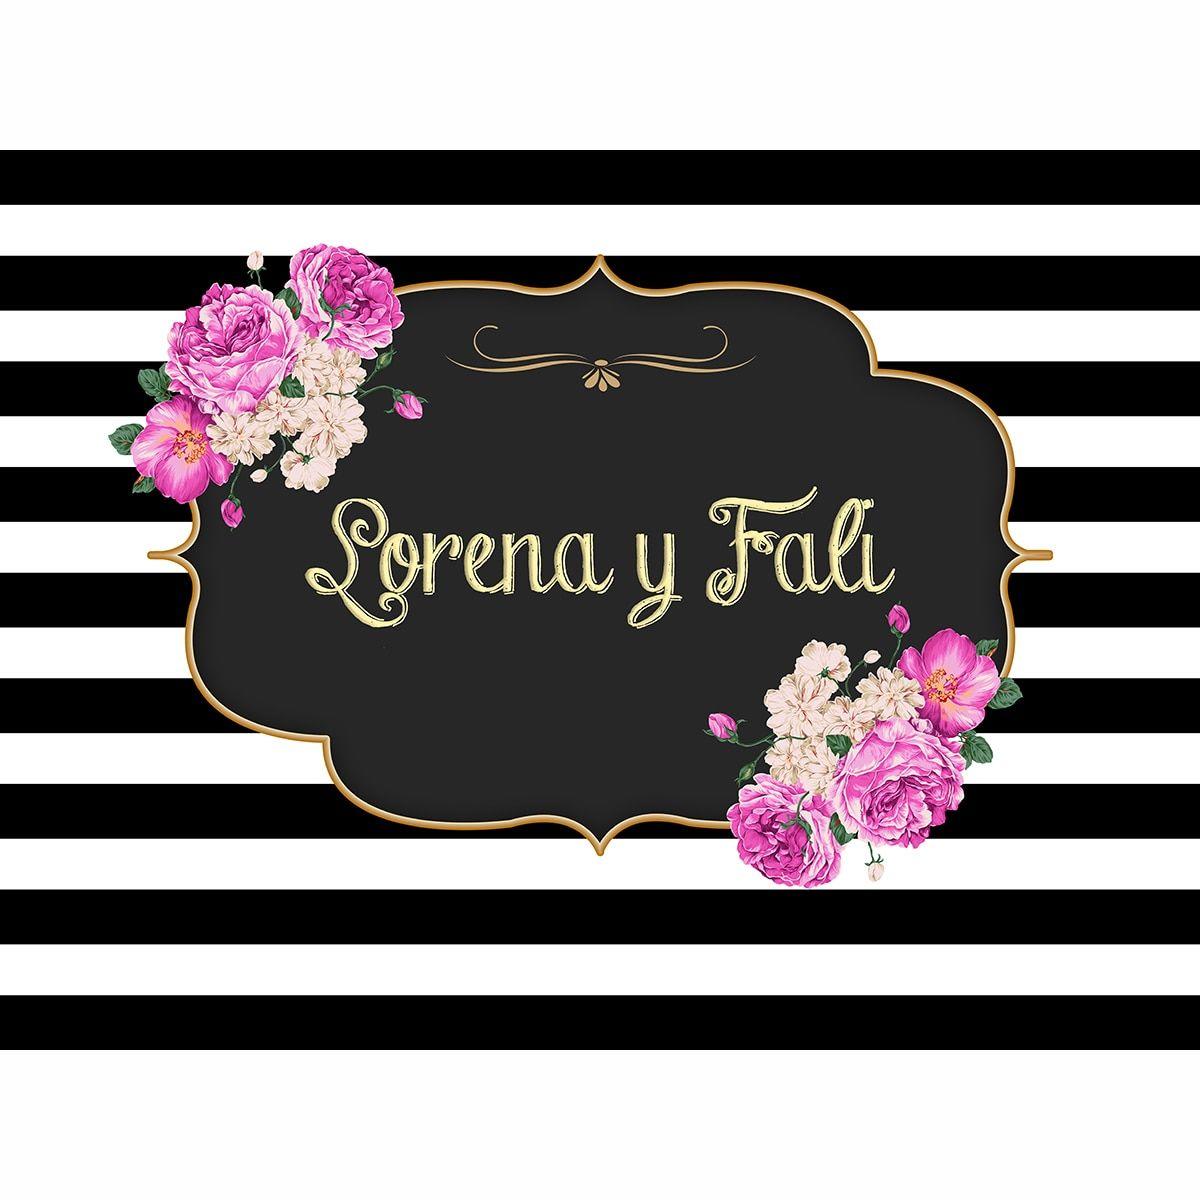 Birthday Flower Logo - Allenjoy new arrivals photo backdrops Black and white striped ...